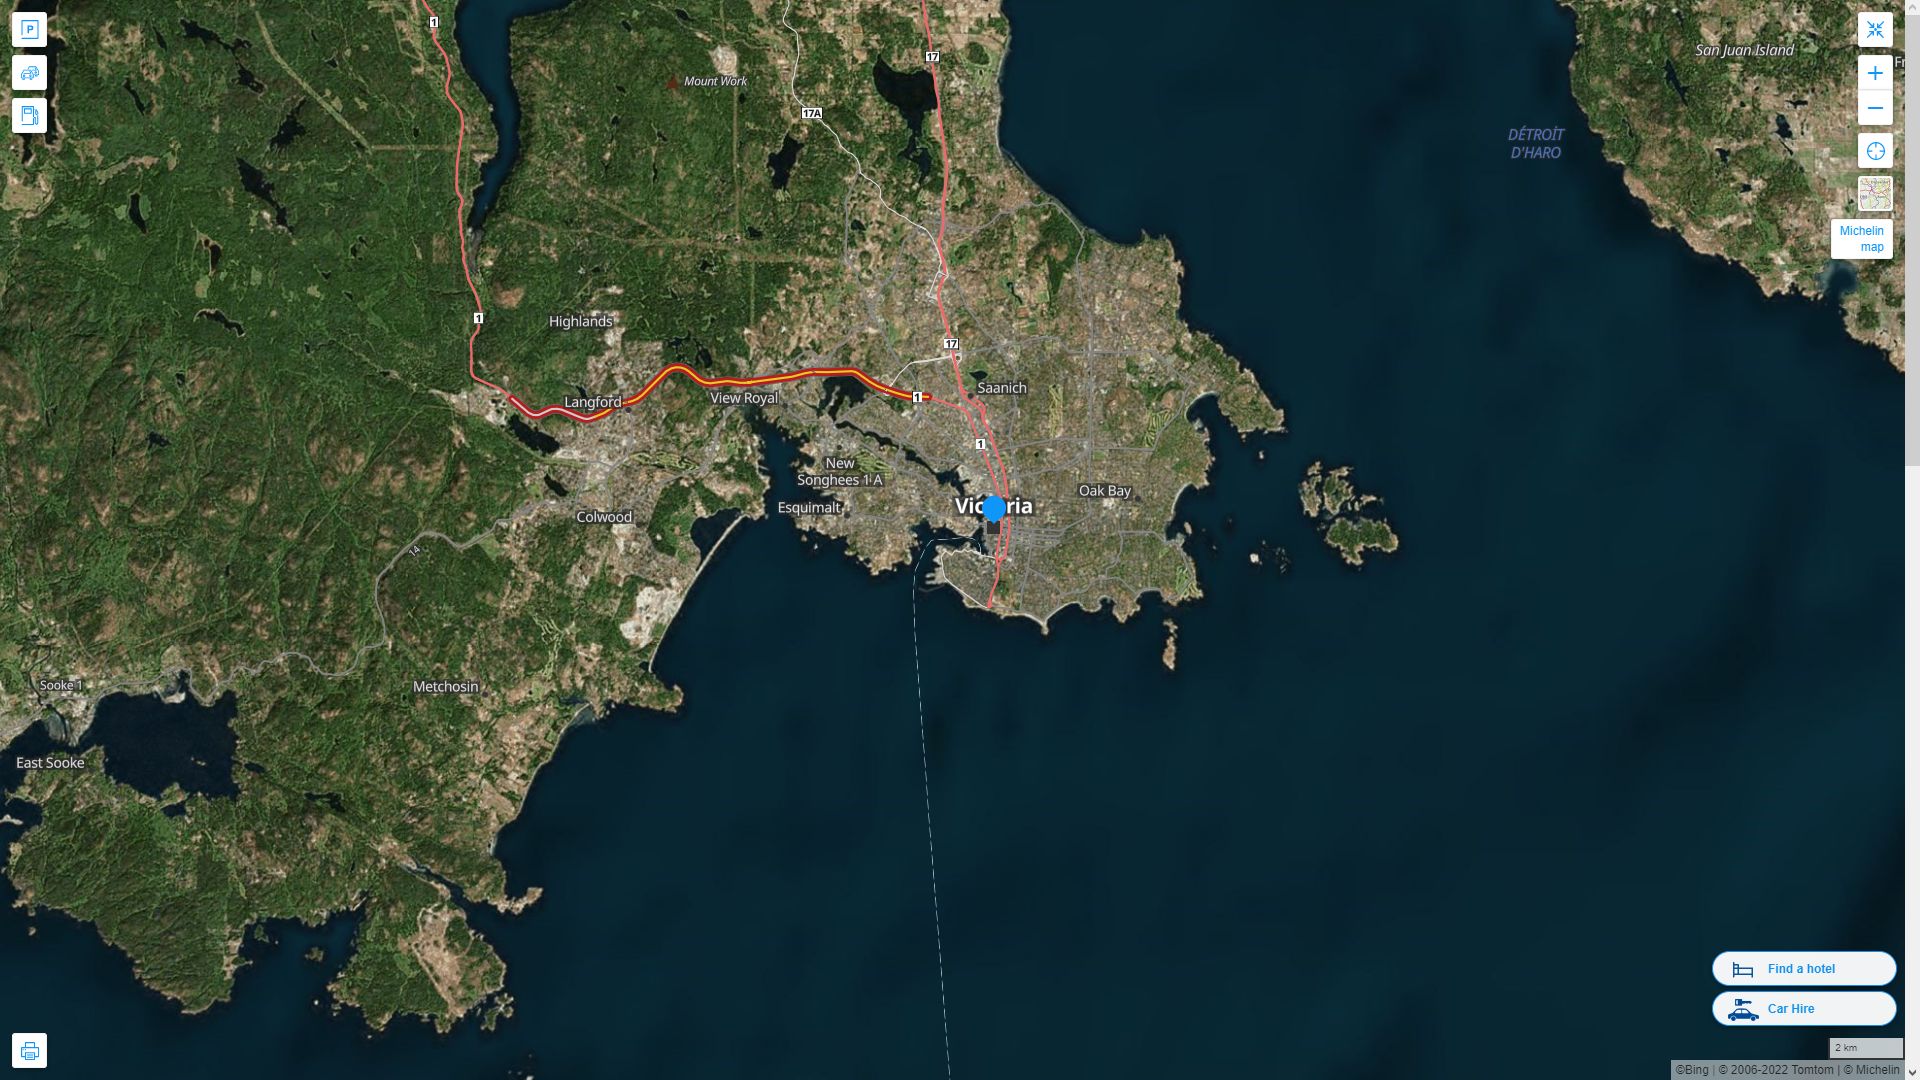 Victoria Canada Autoroute et carte routiere avec vue satellite